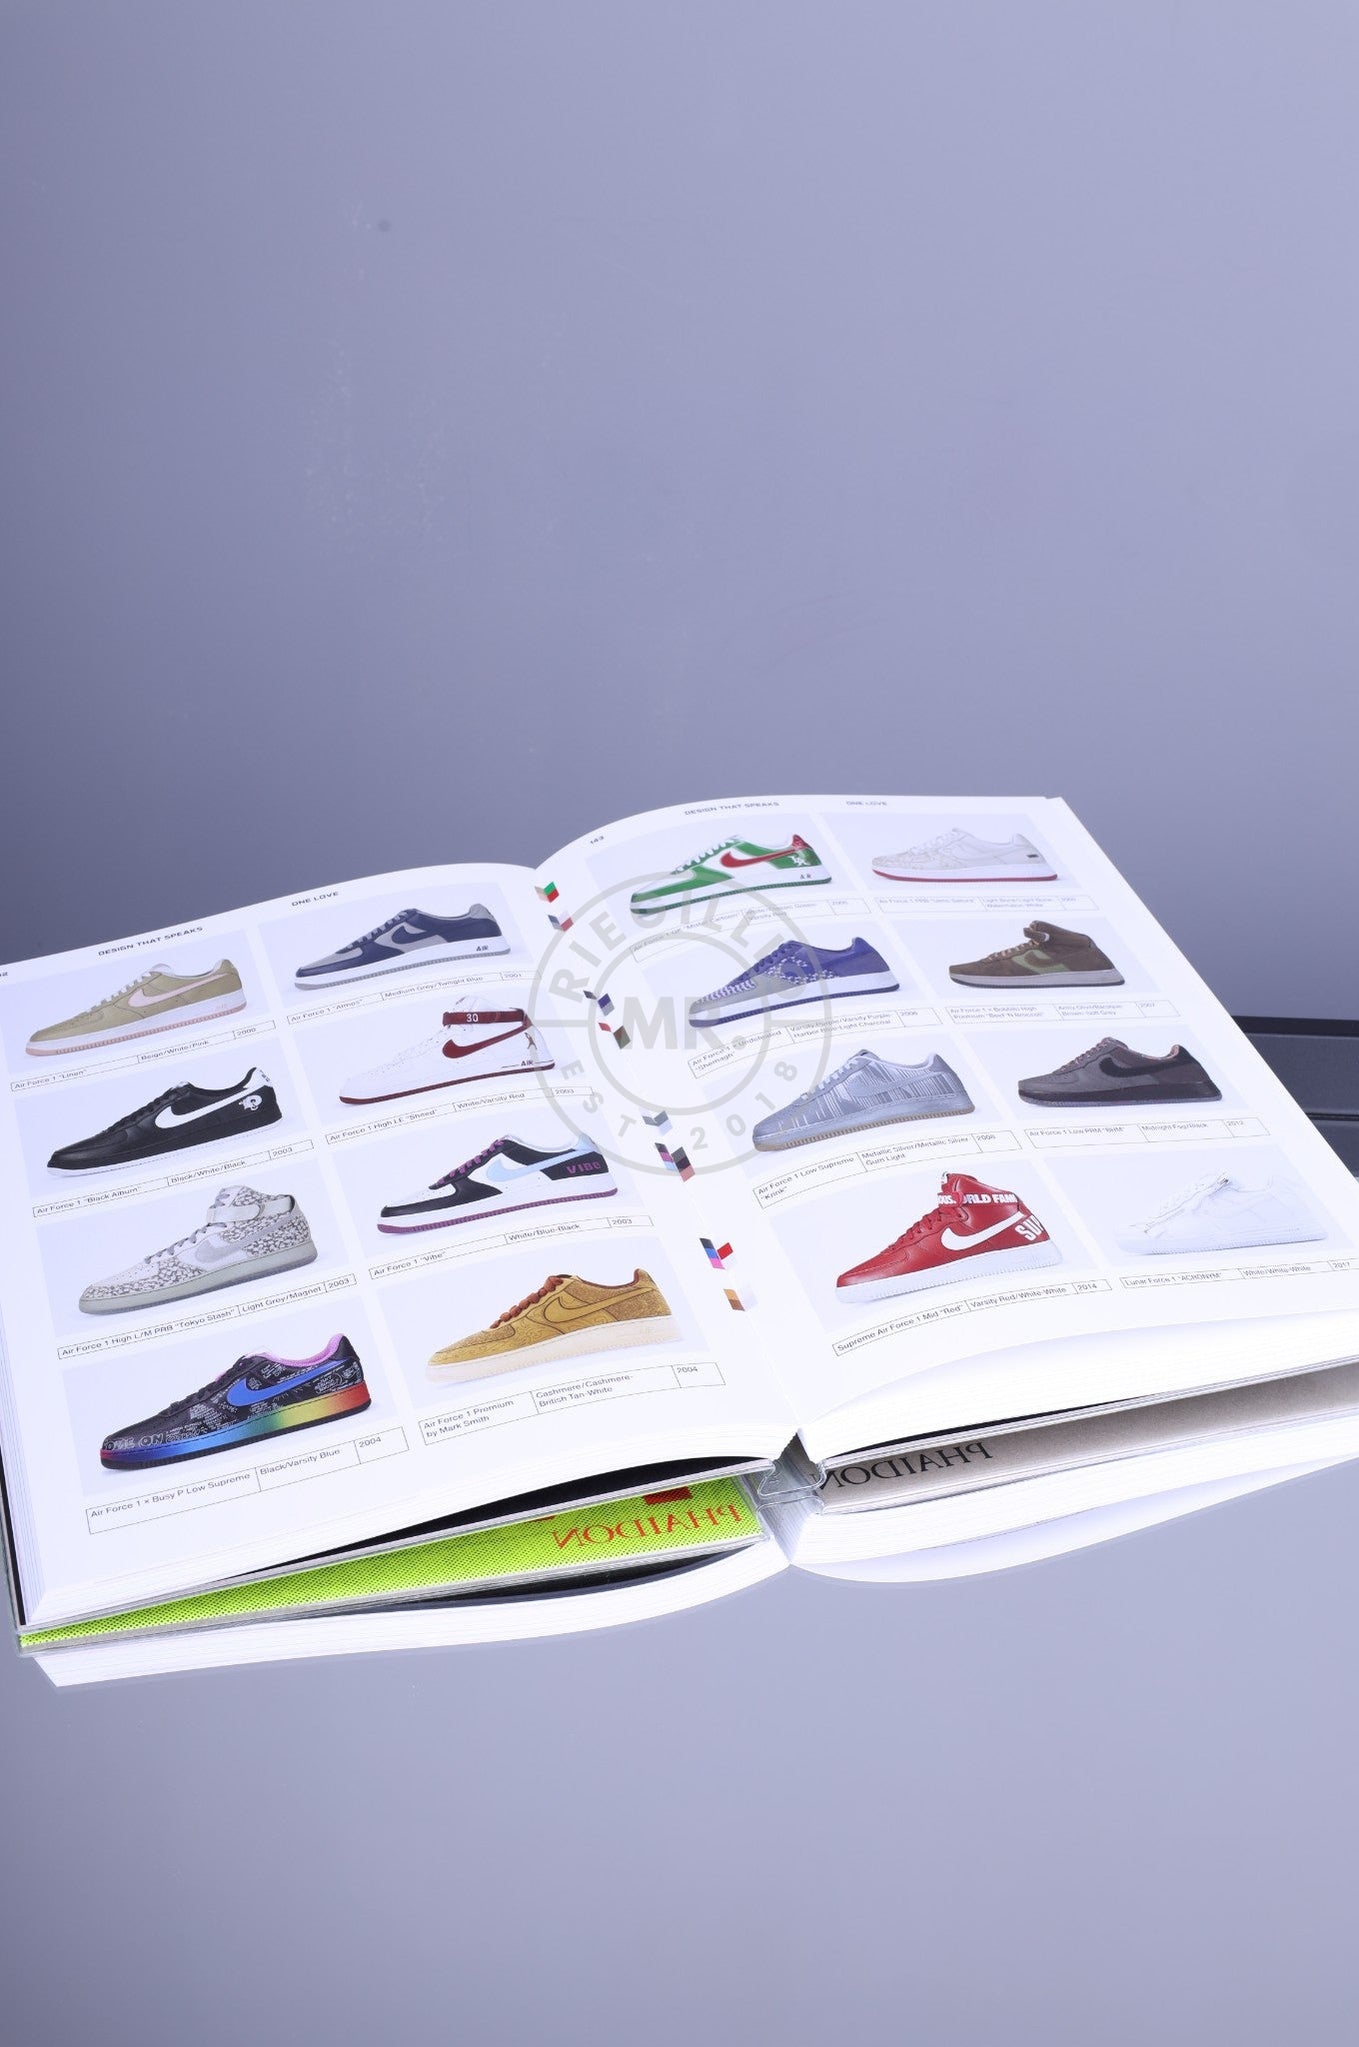 Table Book NIKE Sneakers-at MR. Riegillio